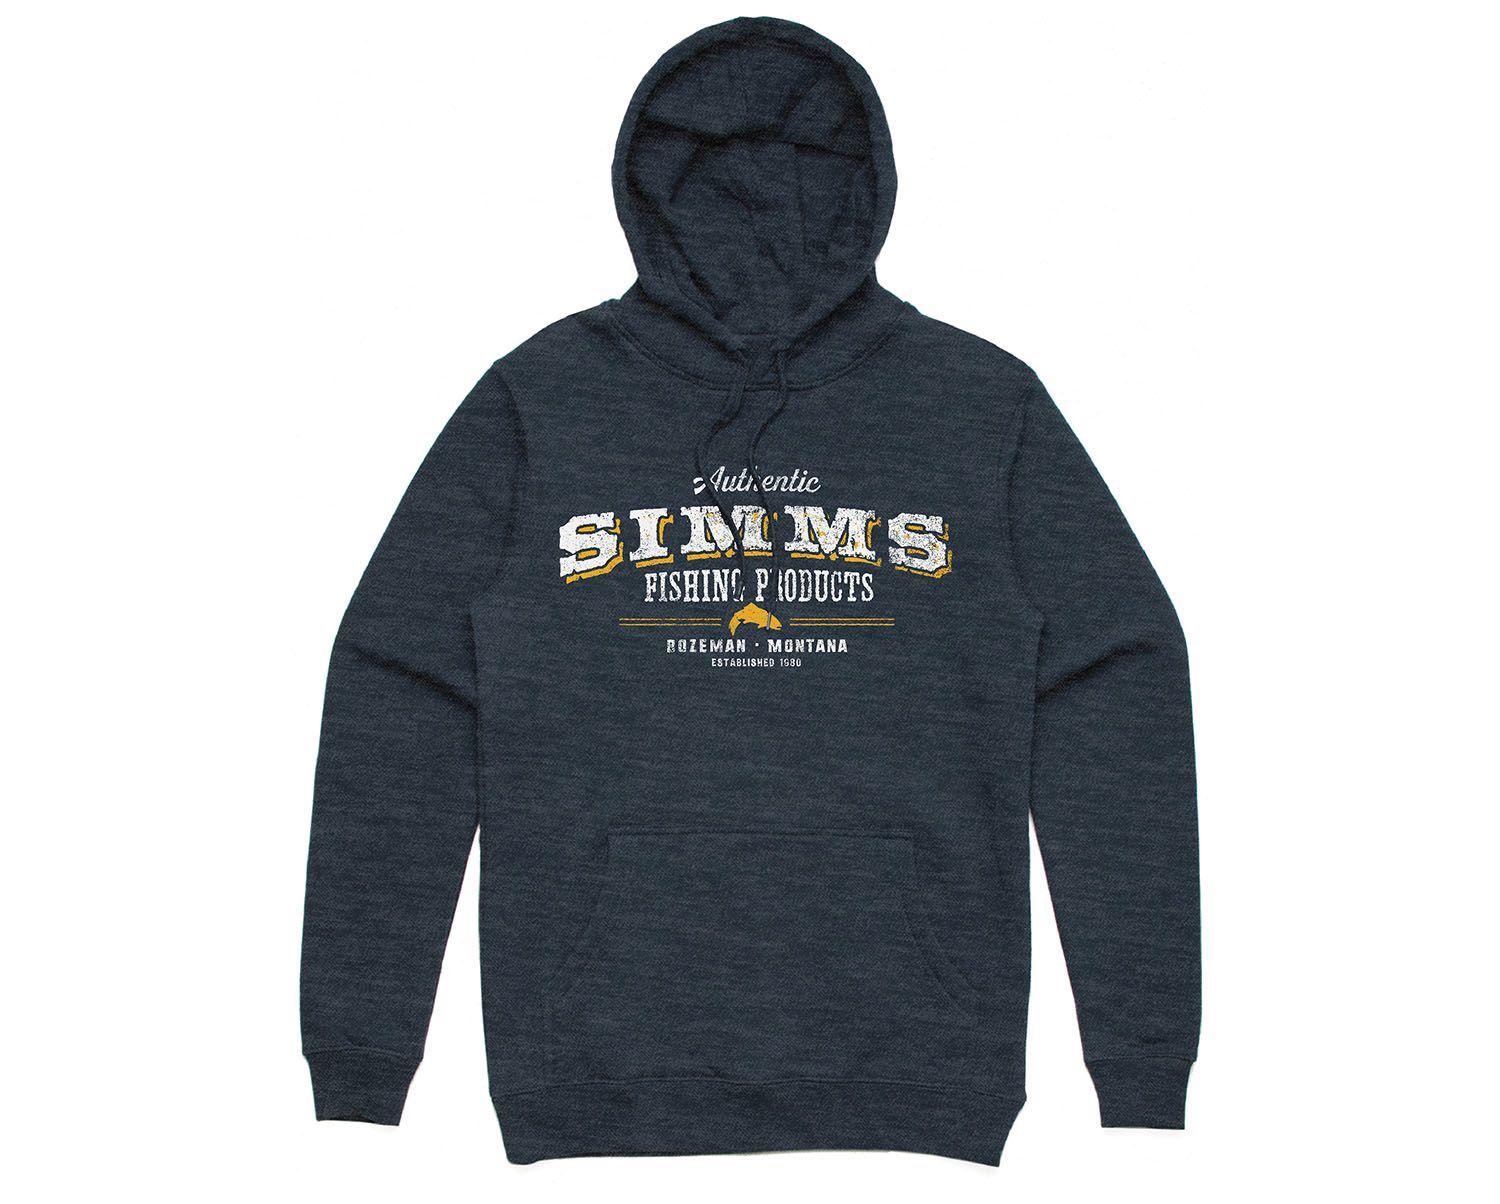 SIMMS Fishing Logo Black Hoodie Sweatshirt Size S-3XL